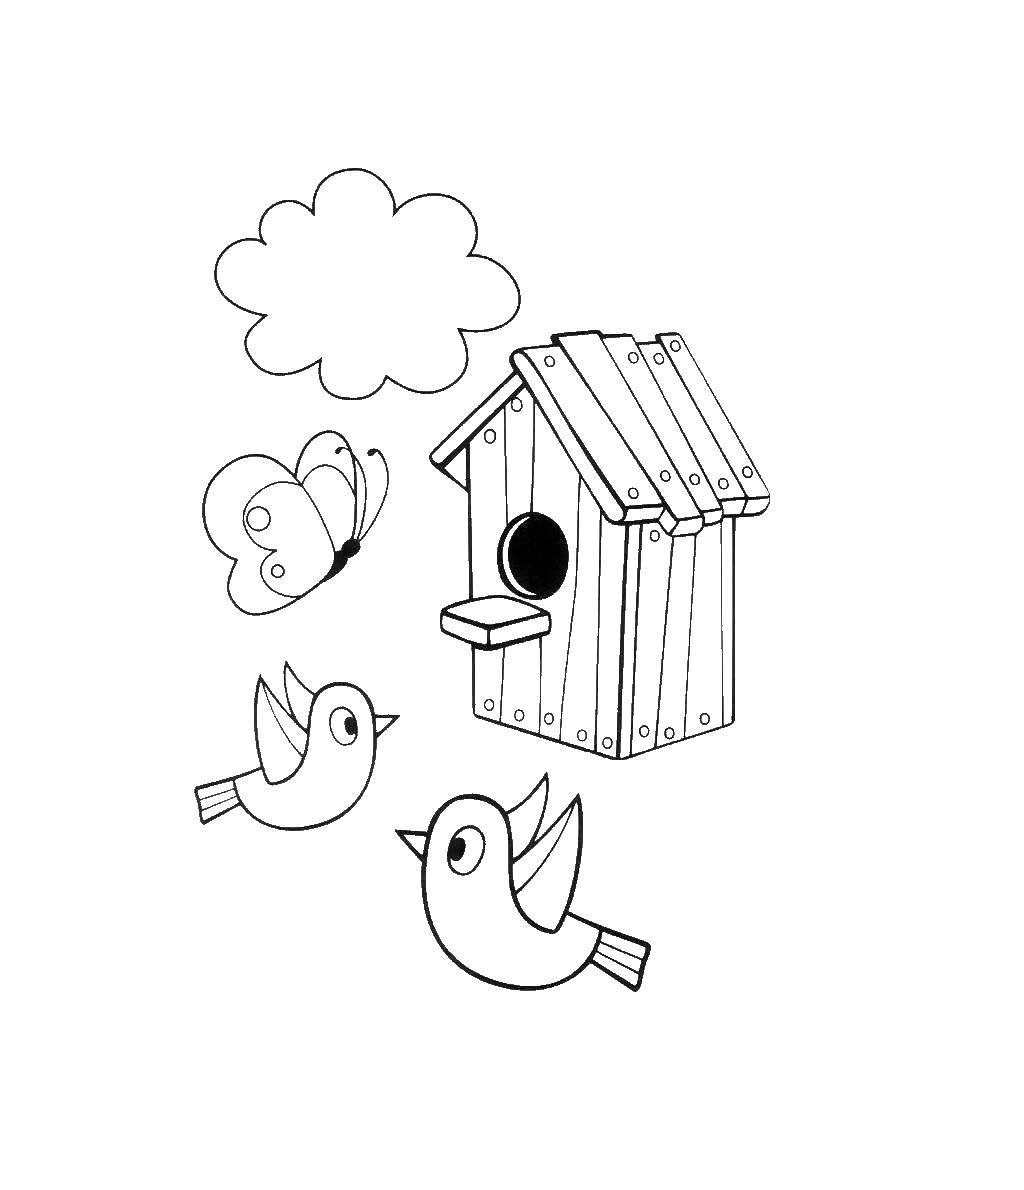 Coloring Birdhouse with birds. Category coloring, buttermilk. Tags:  Birdhouse, birds.